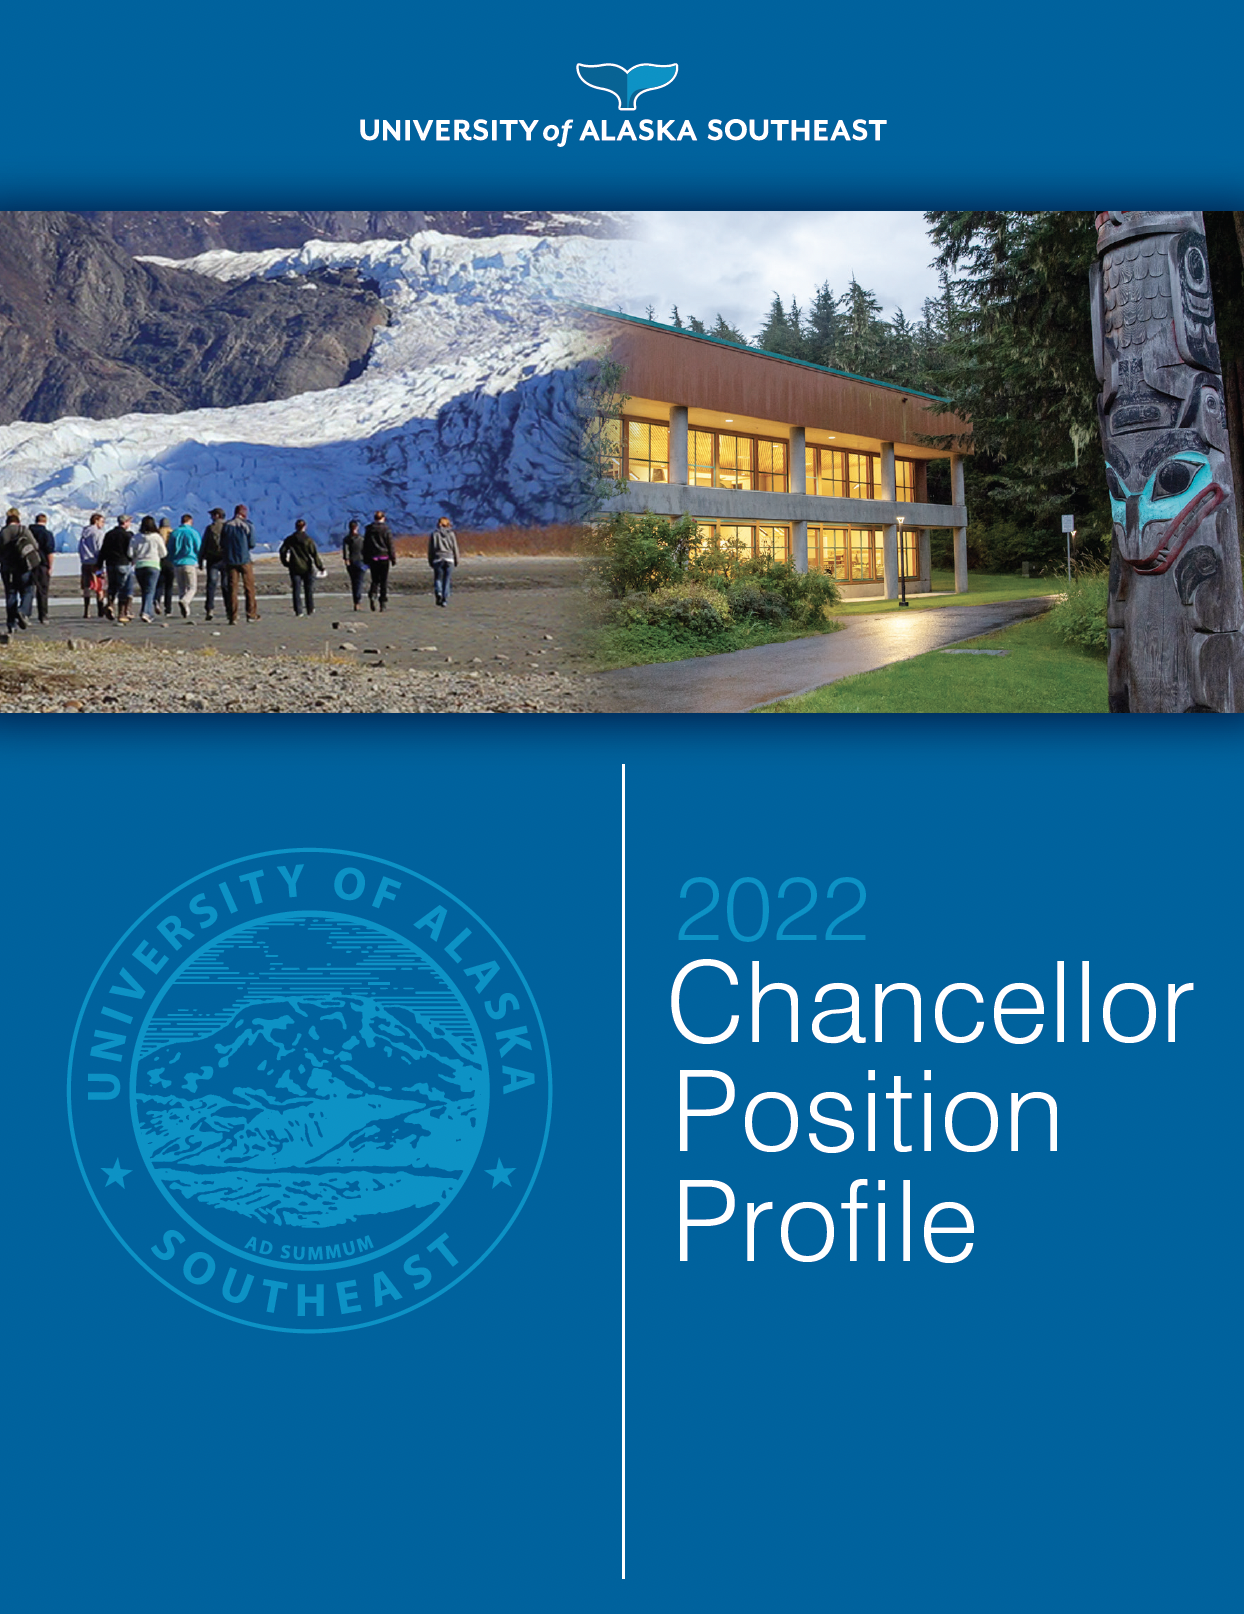 Position Profile cover image